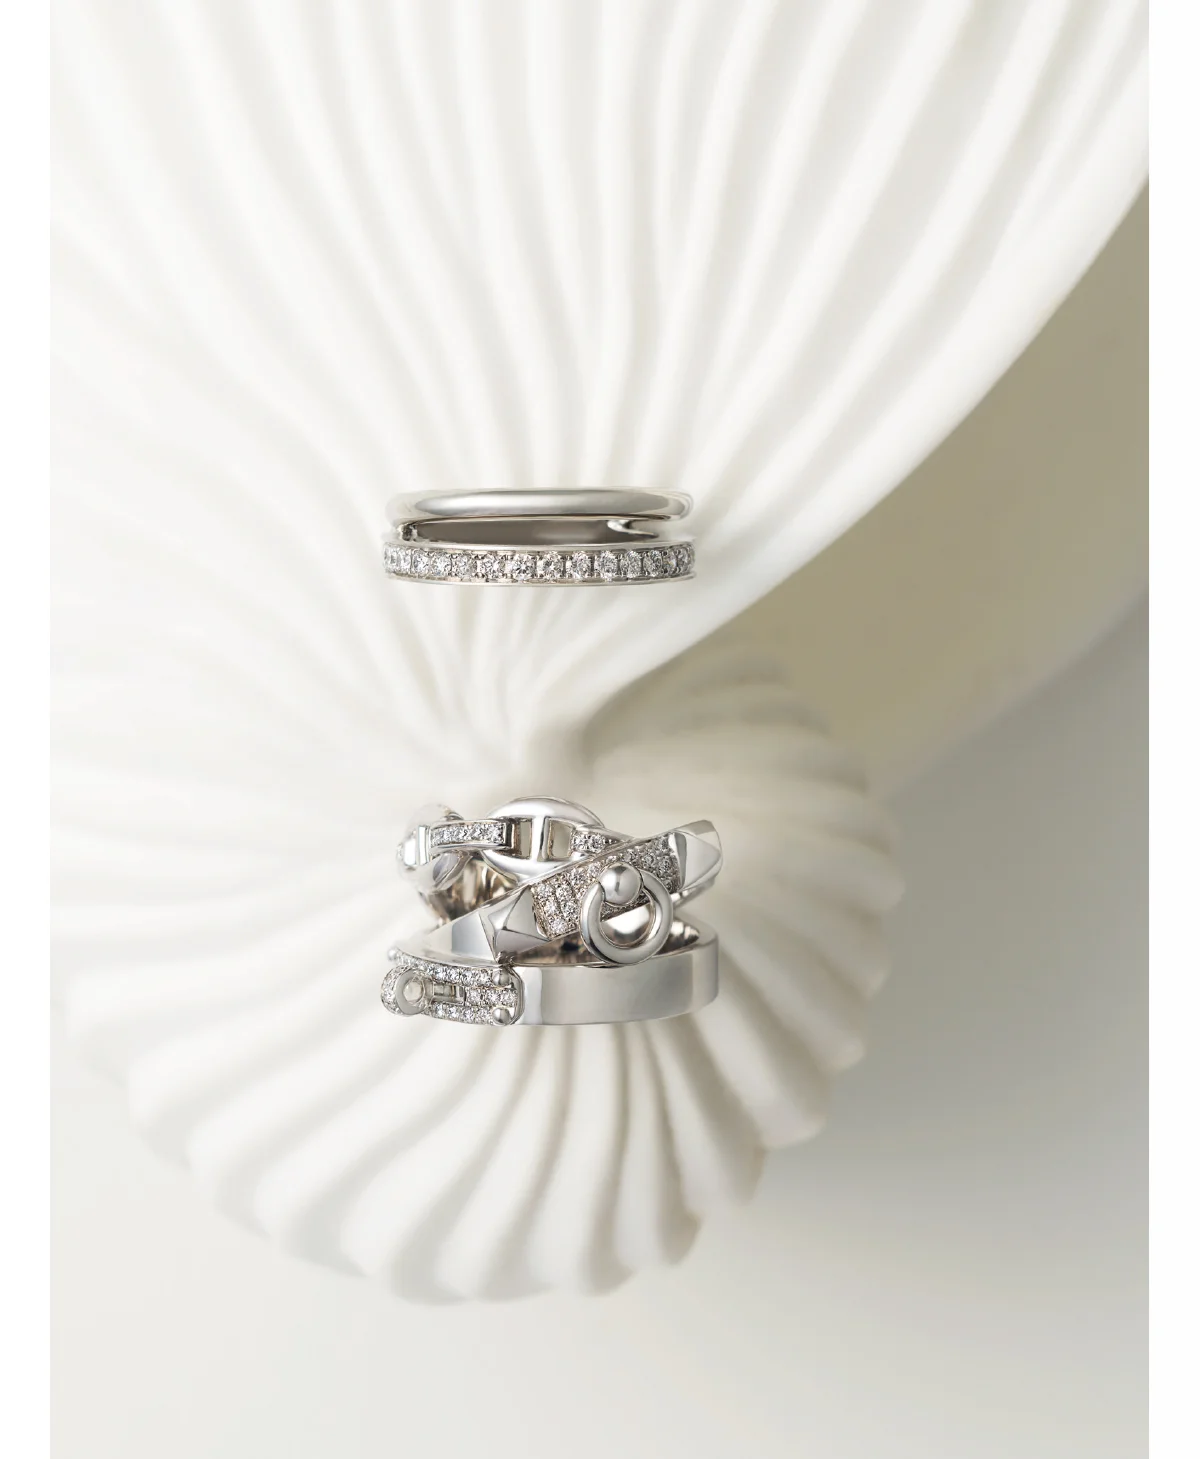 Hermès（エルメス）の結婚指輪・婚約指輪